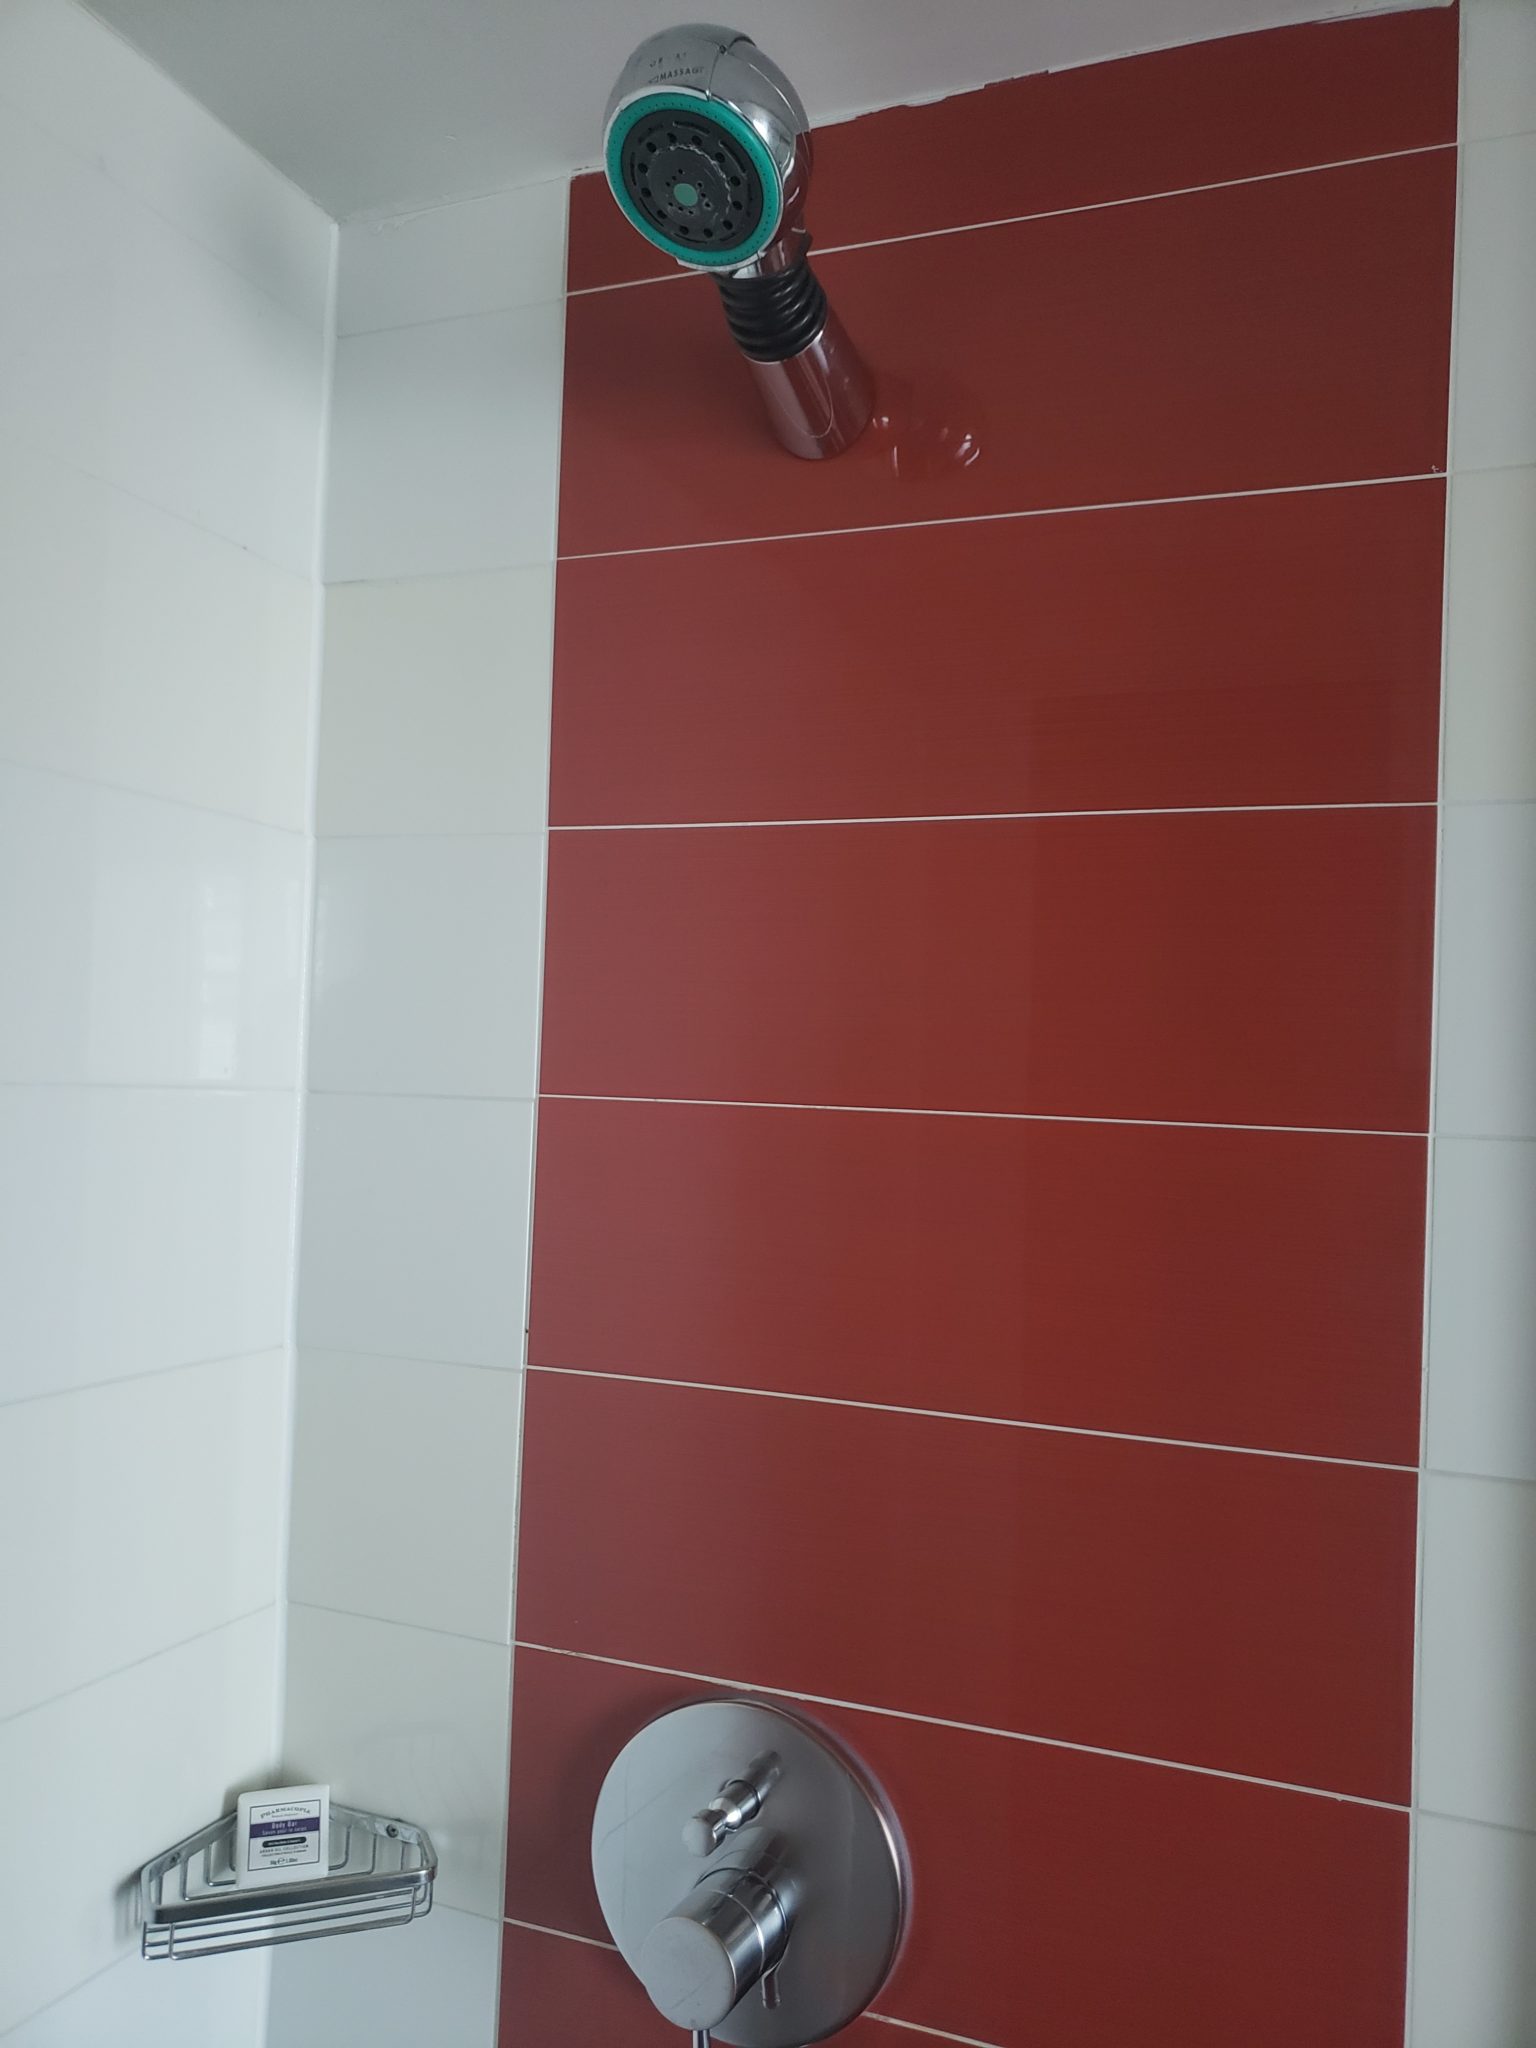 a shower head on a tile wall